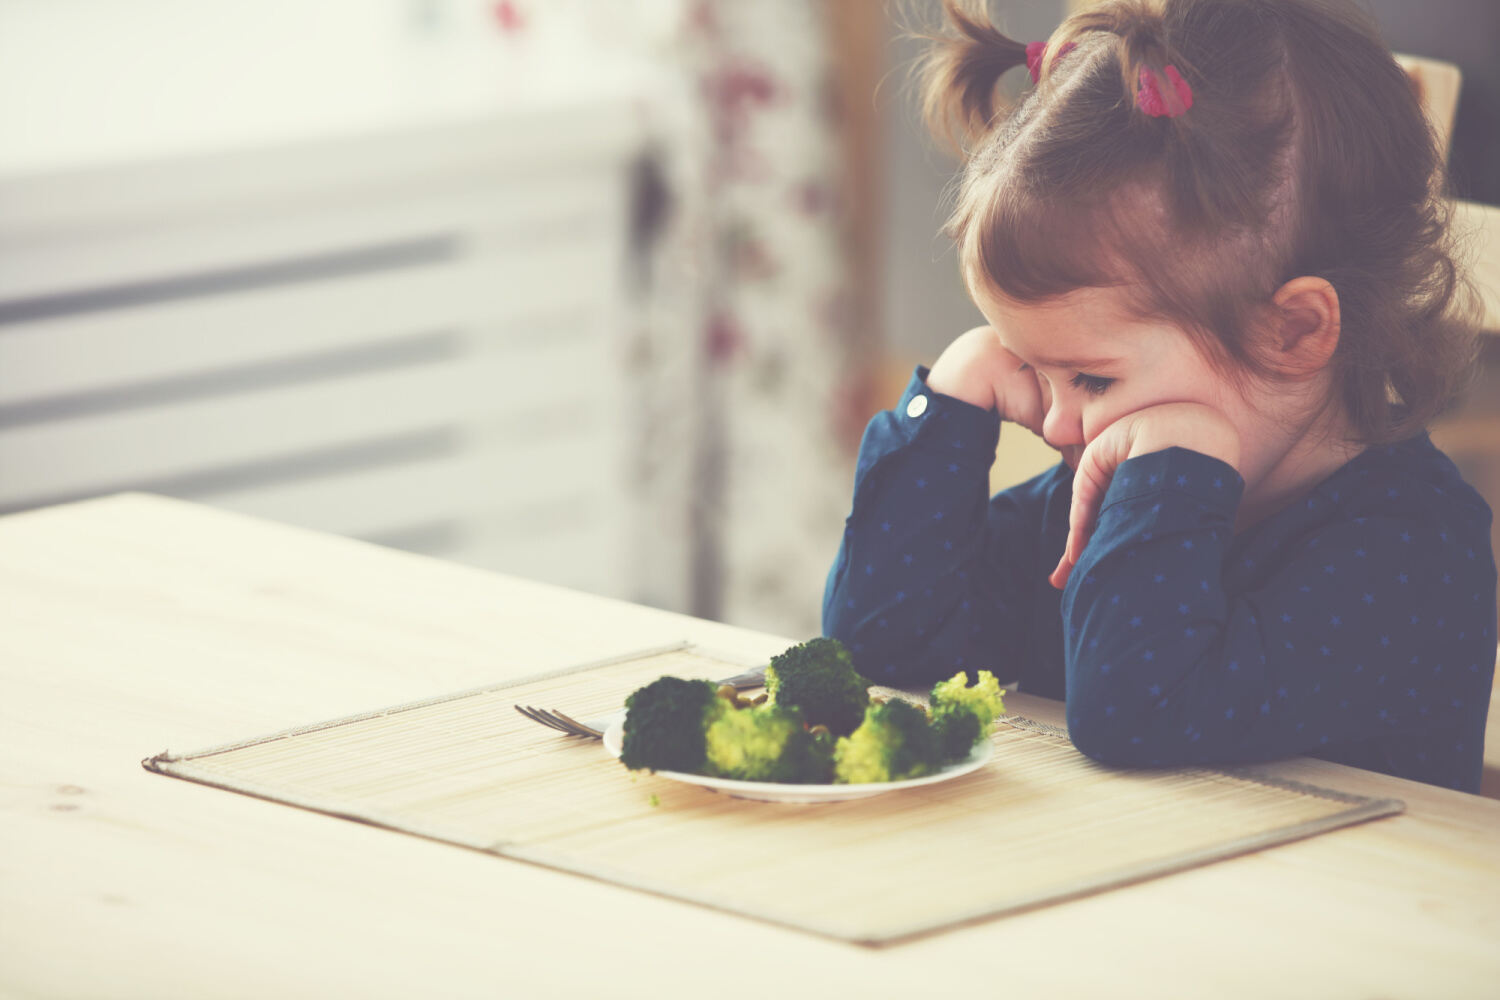 A little girl refusing broccoli